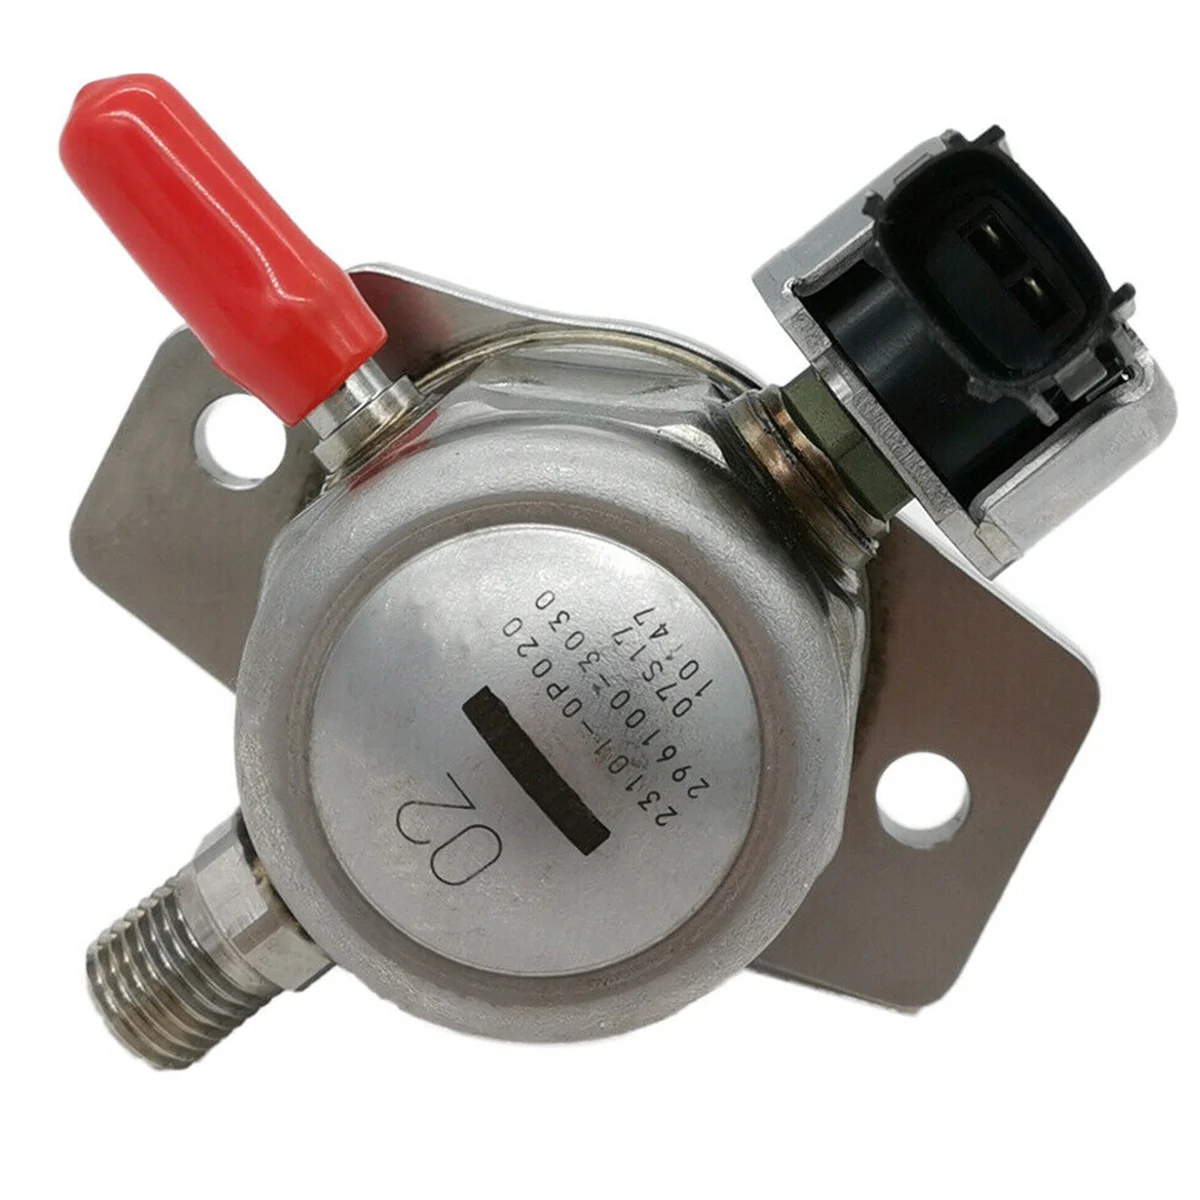 

High Pressure Fuel Pump for Toyota Tacoma Highlander GS350 GS450H 23101-0P020 2961003030